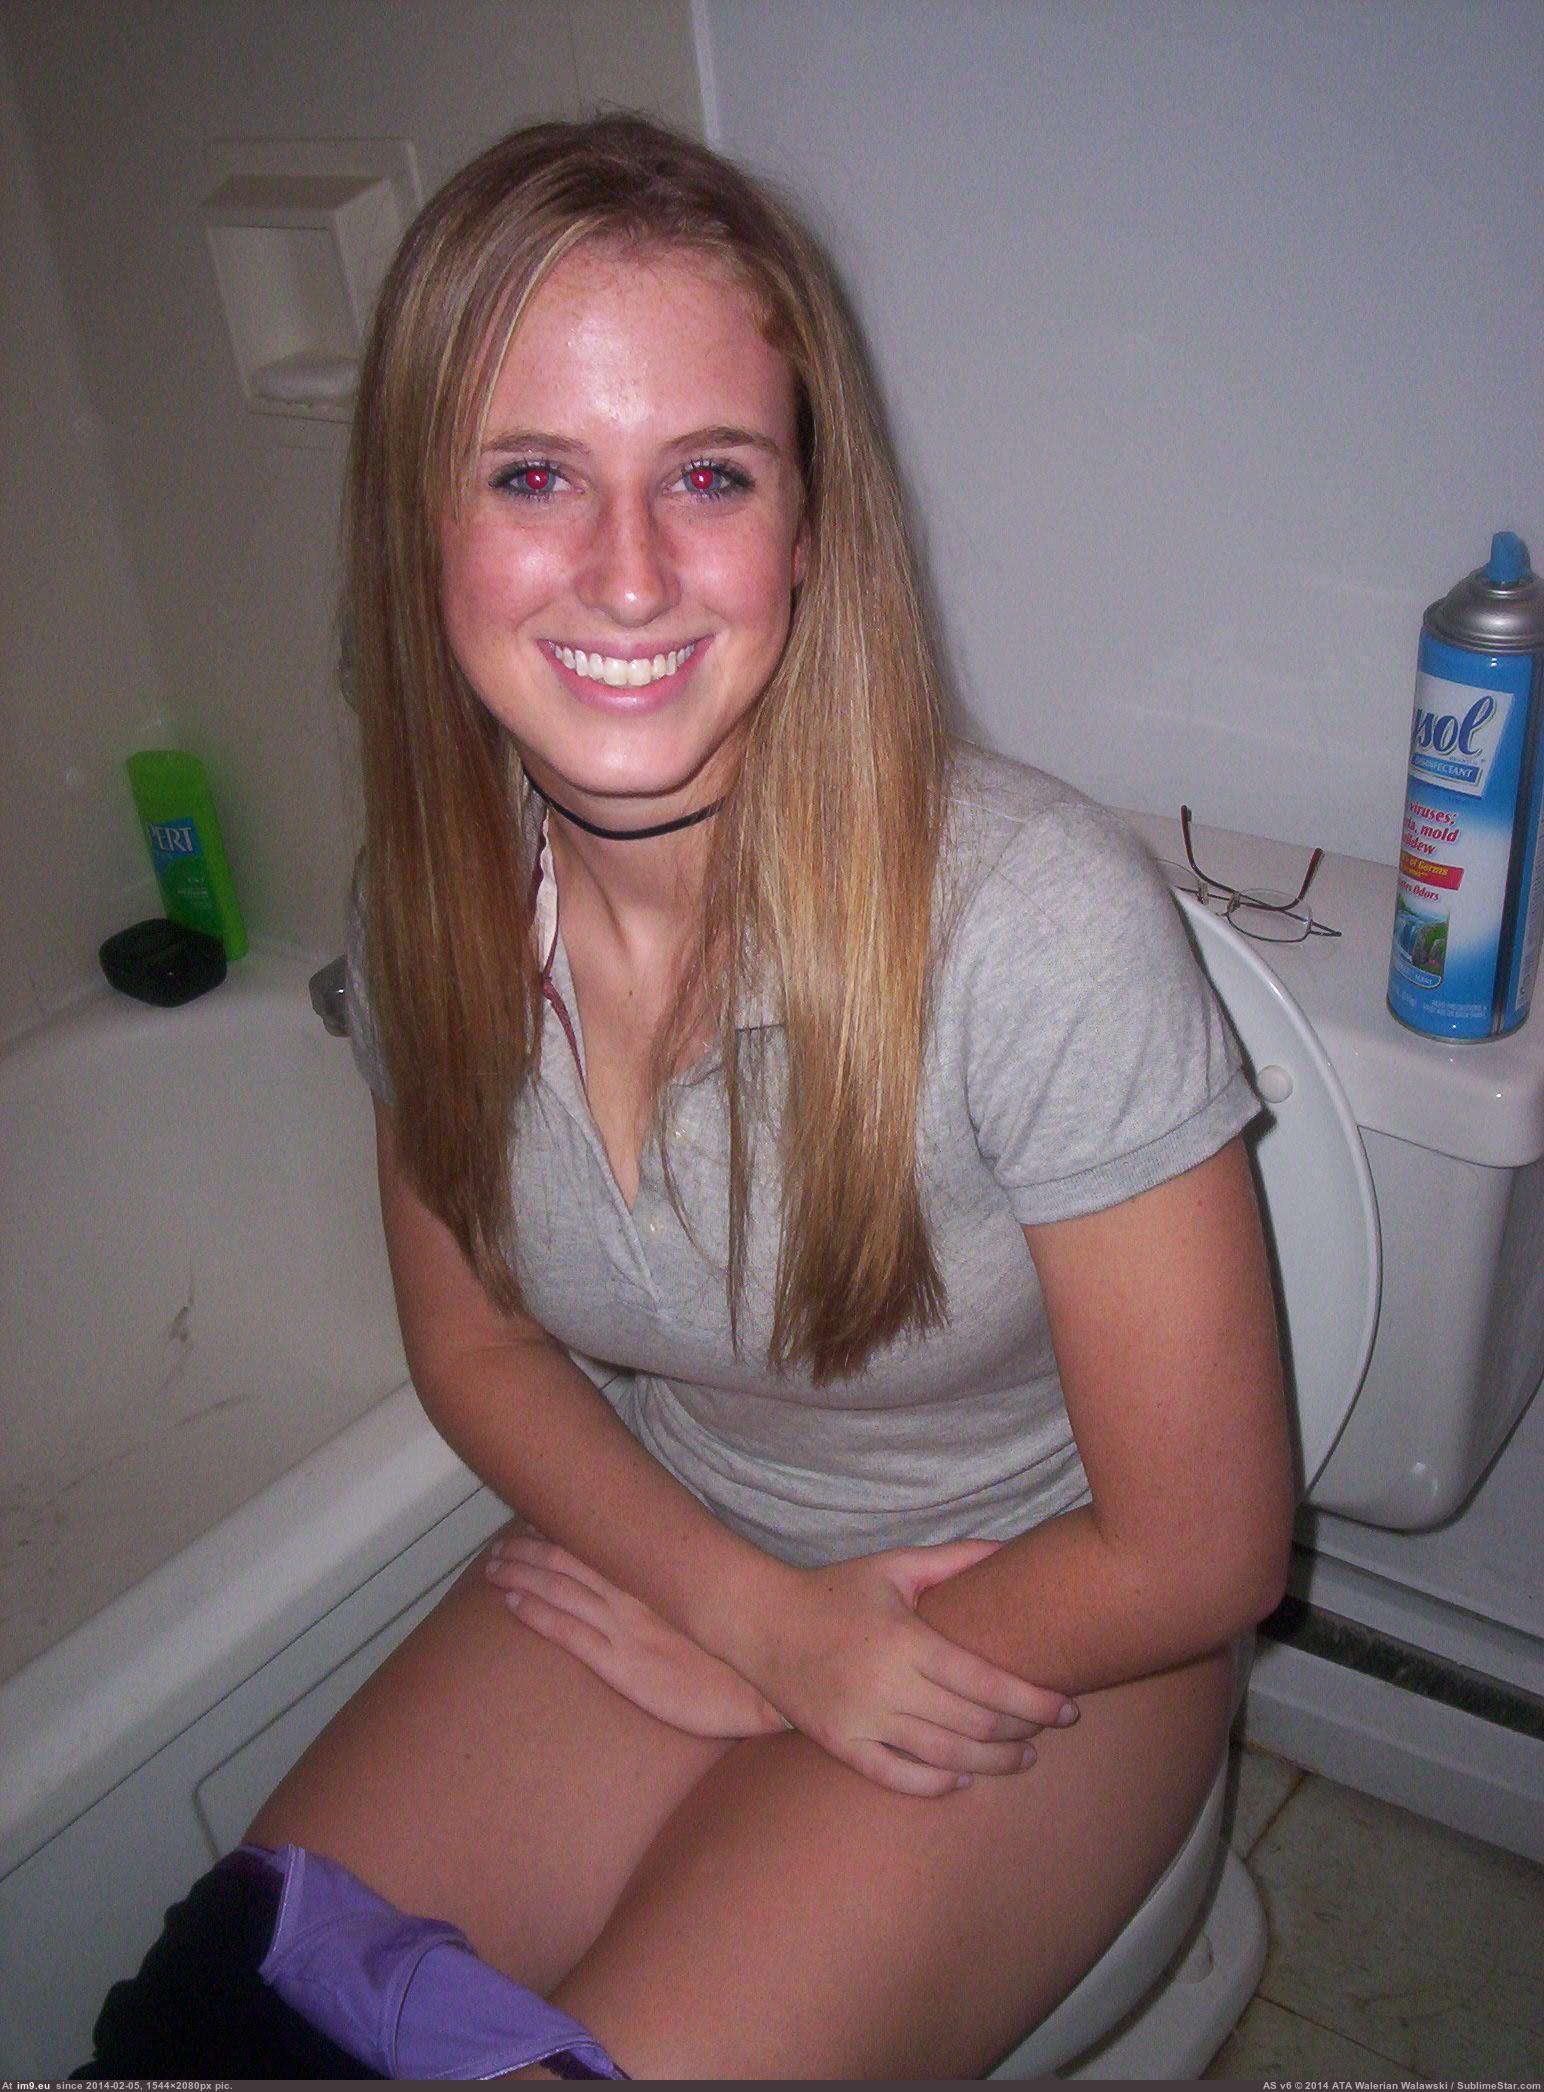 Peeing In Toilet - Pic. #Porn #Girls #Teen #Toilet #Bowl #Toilets #Young #Peeing #Pissing,  333391B â€“ Teen Girls Pissing Porn (Young Teens Toilet Peeing)